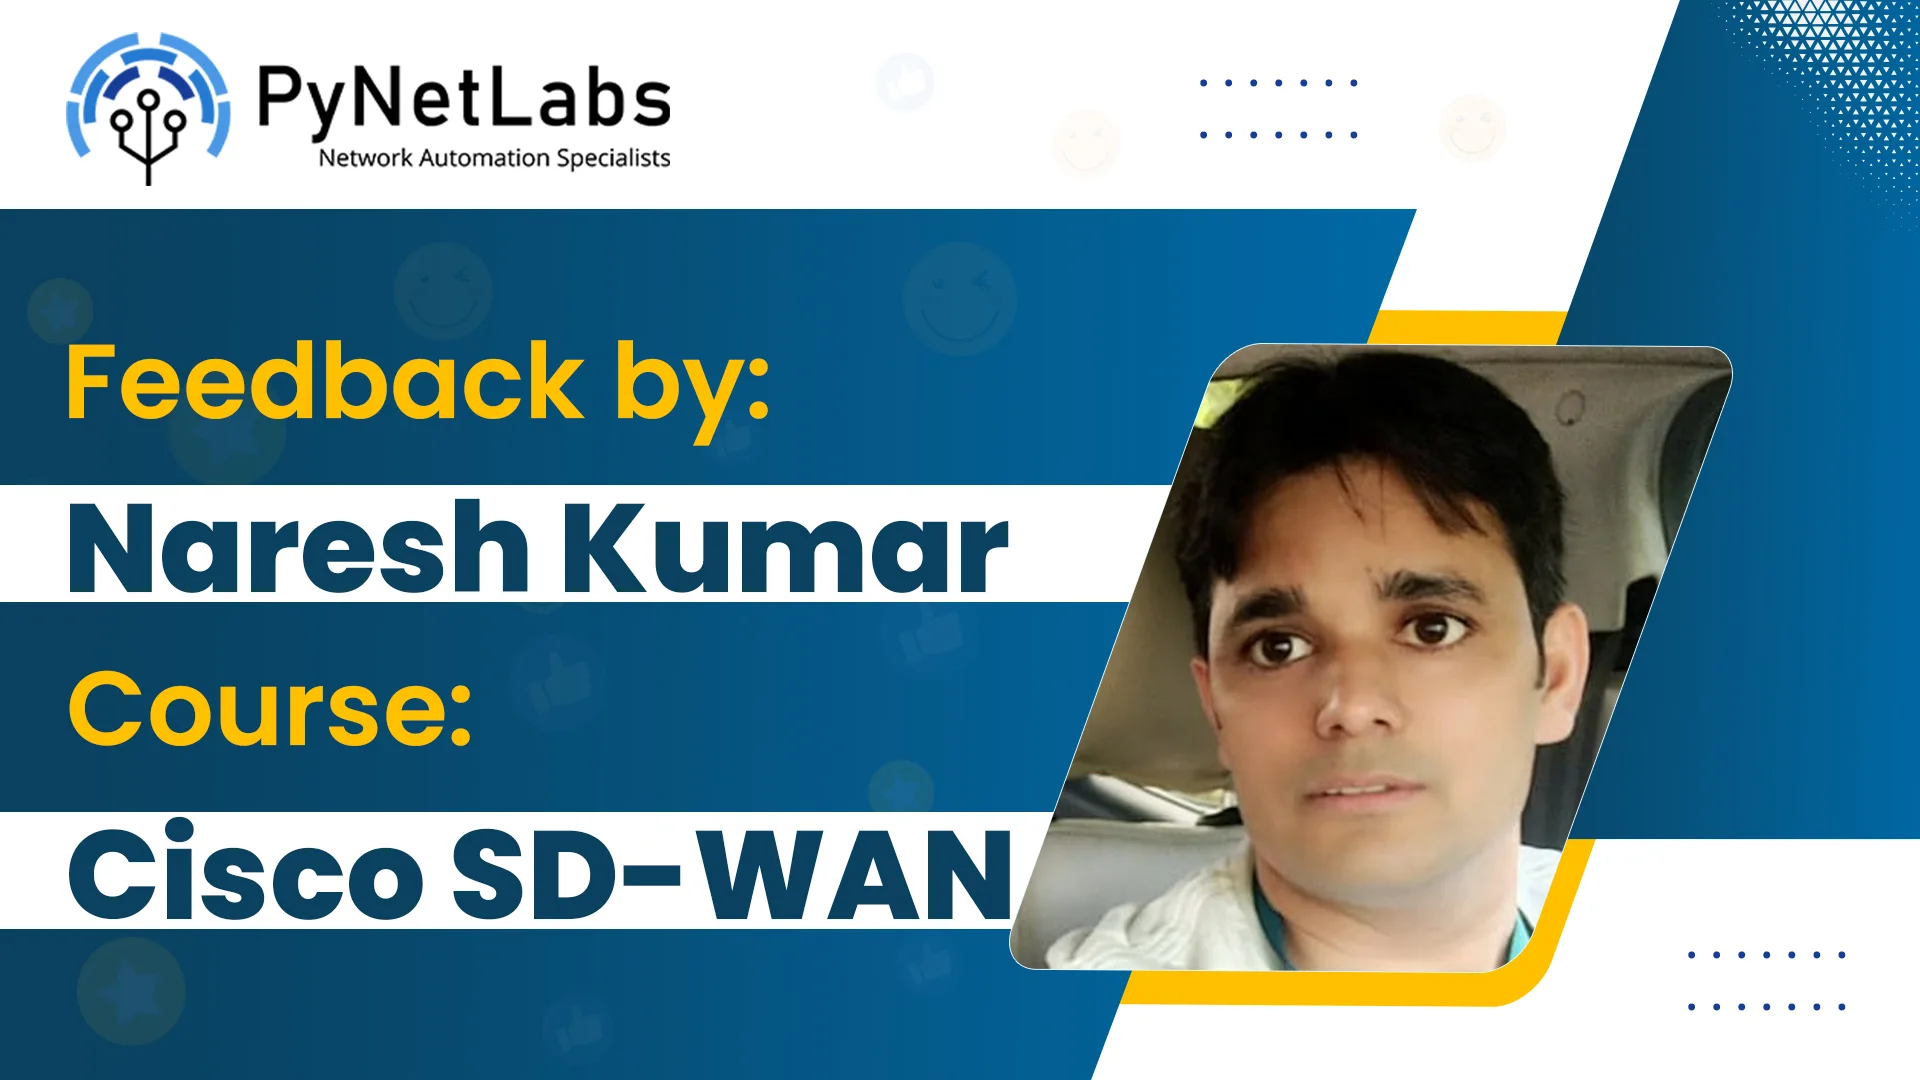 Feedback by Naresh Kumar for course - Cisco SD-WAN